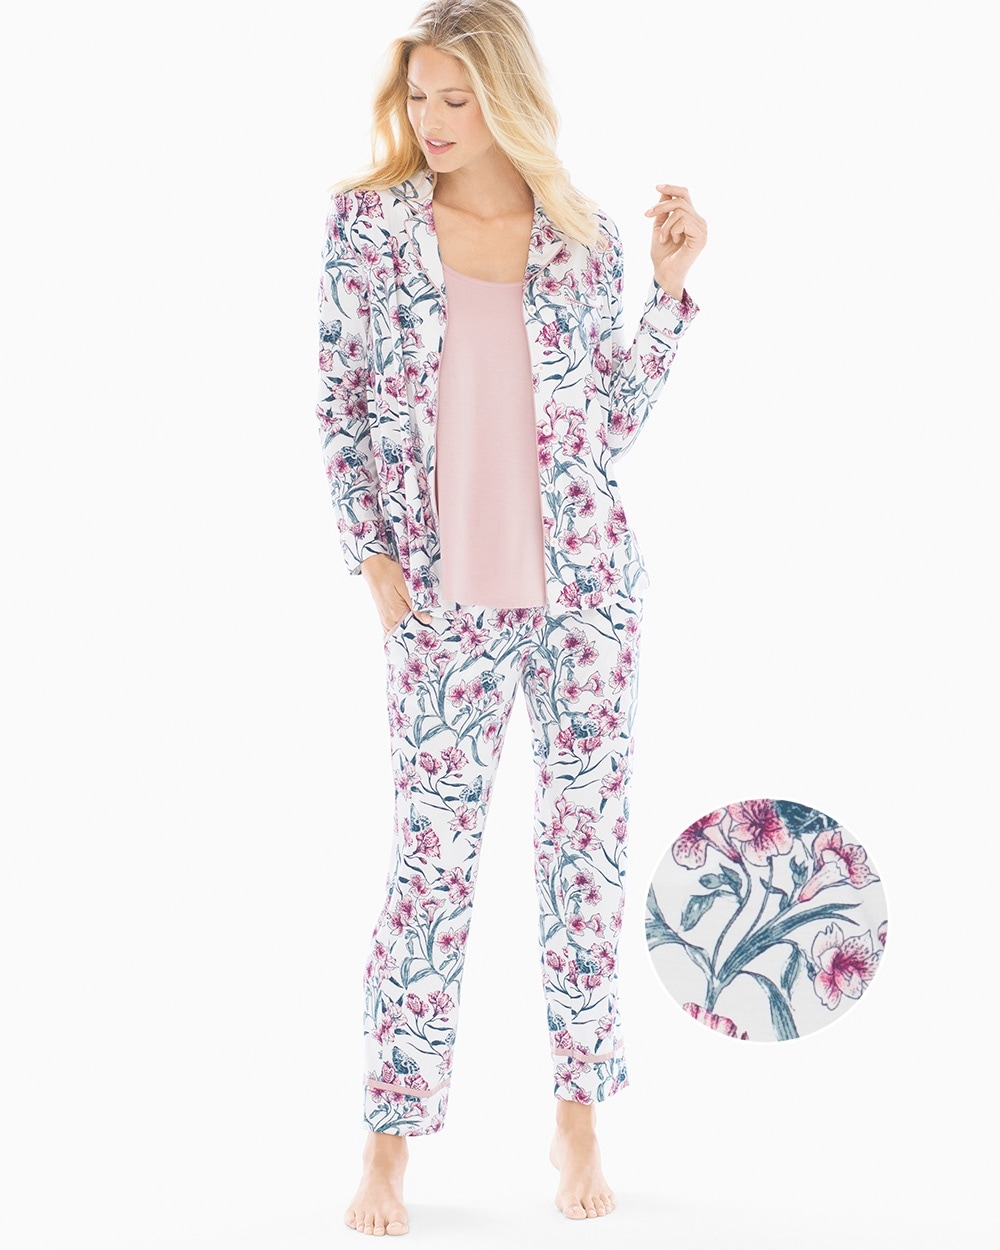 Cool Nights 3 Piece Pajama Set